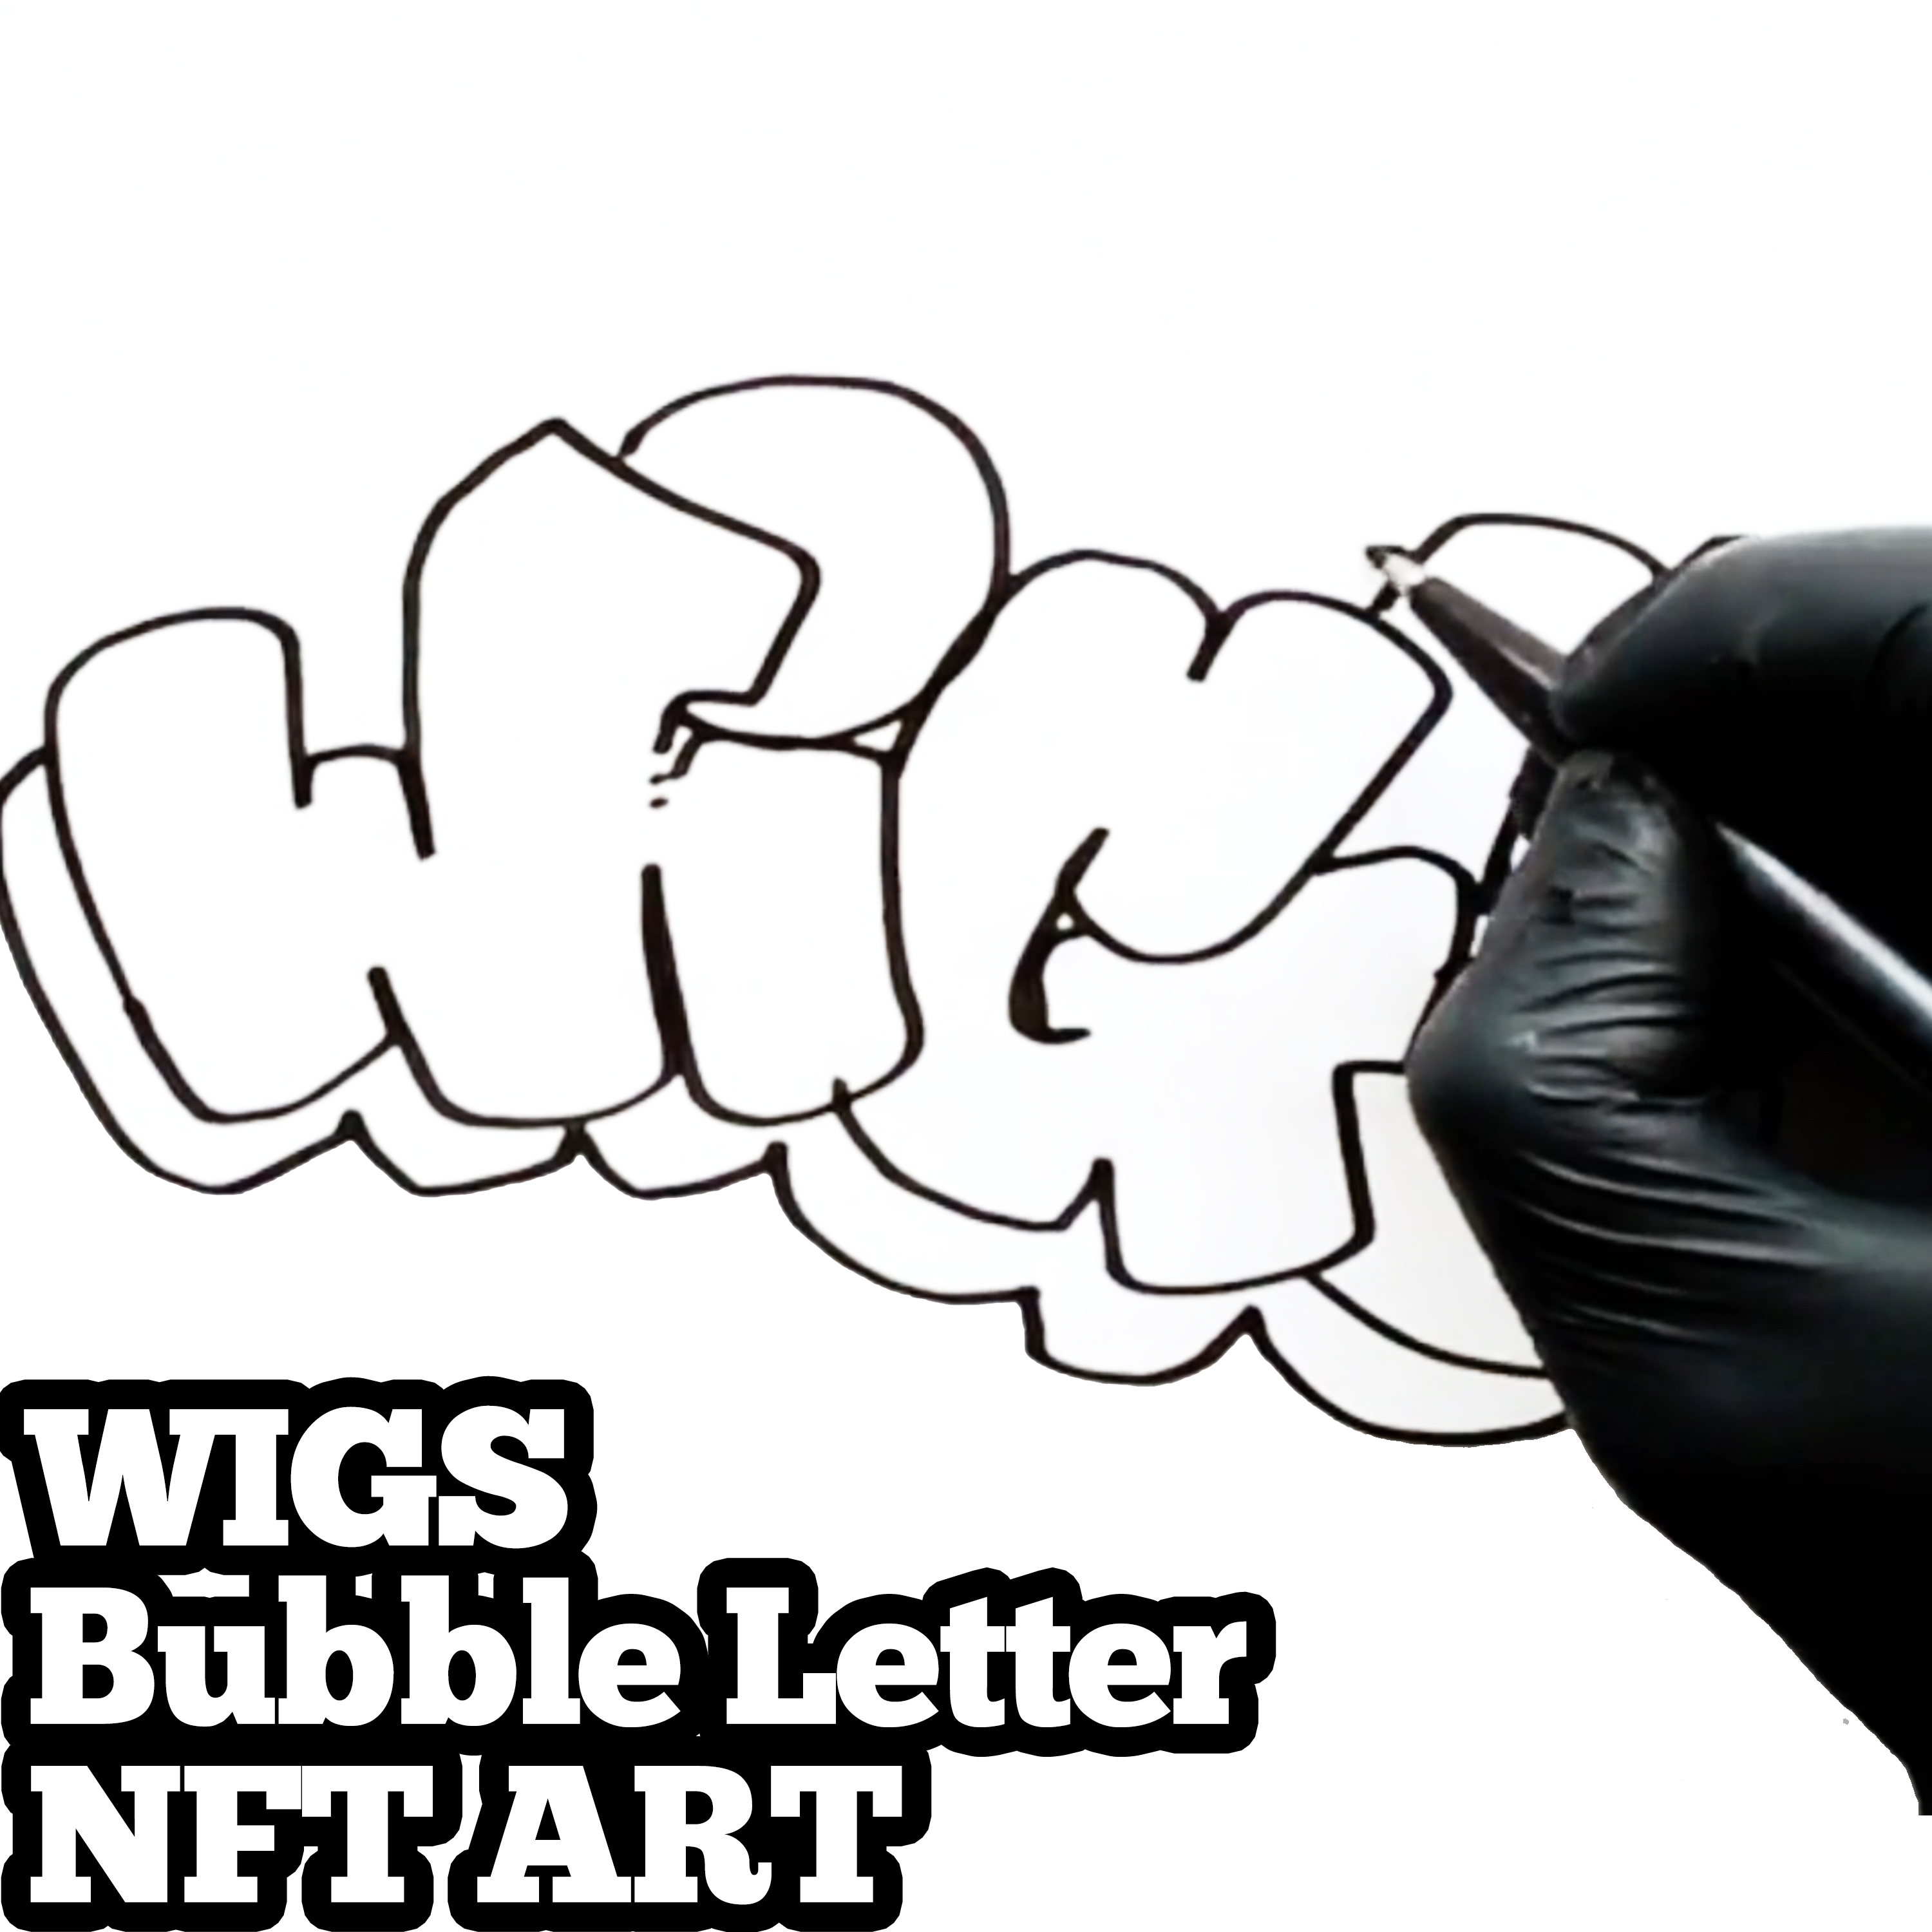 nft art signature WIGS bubble